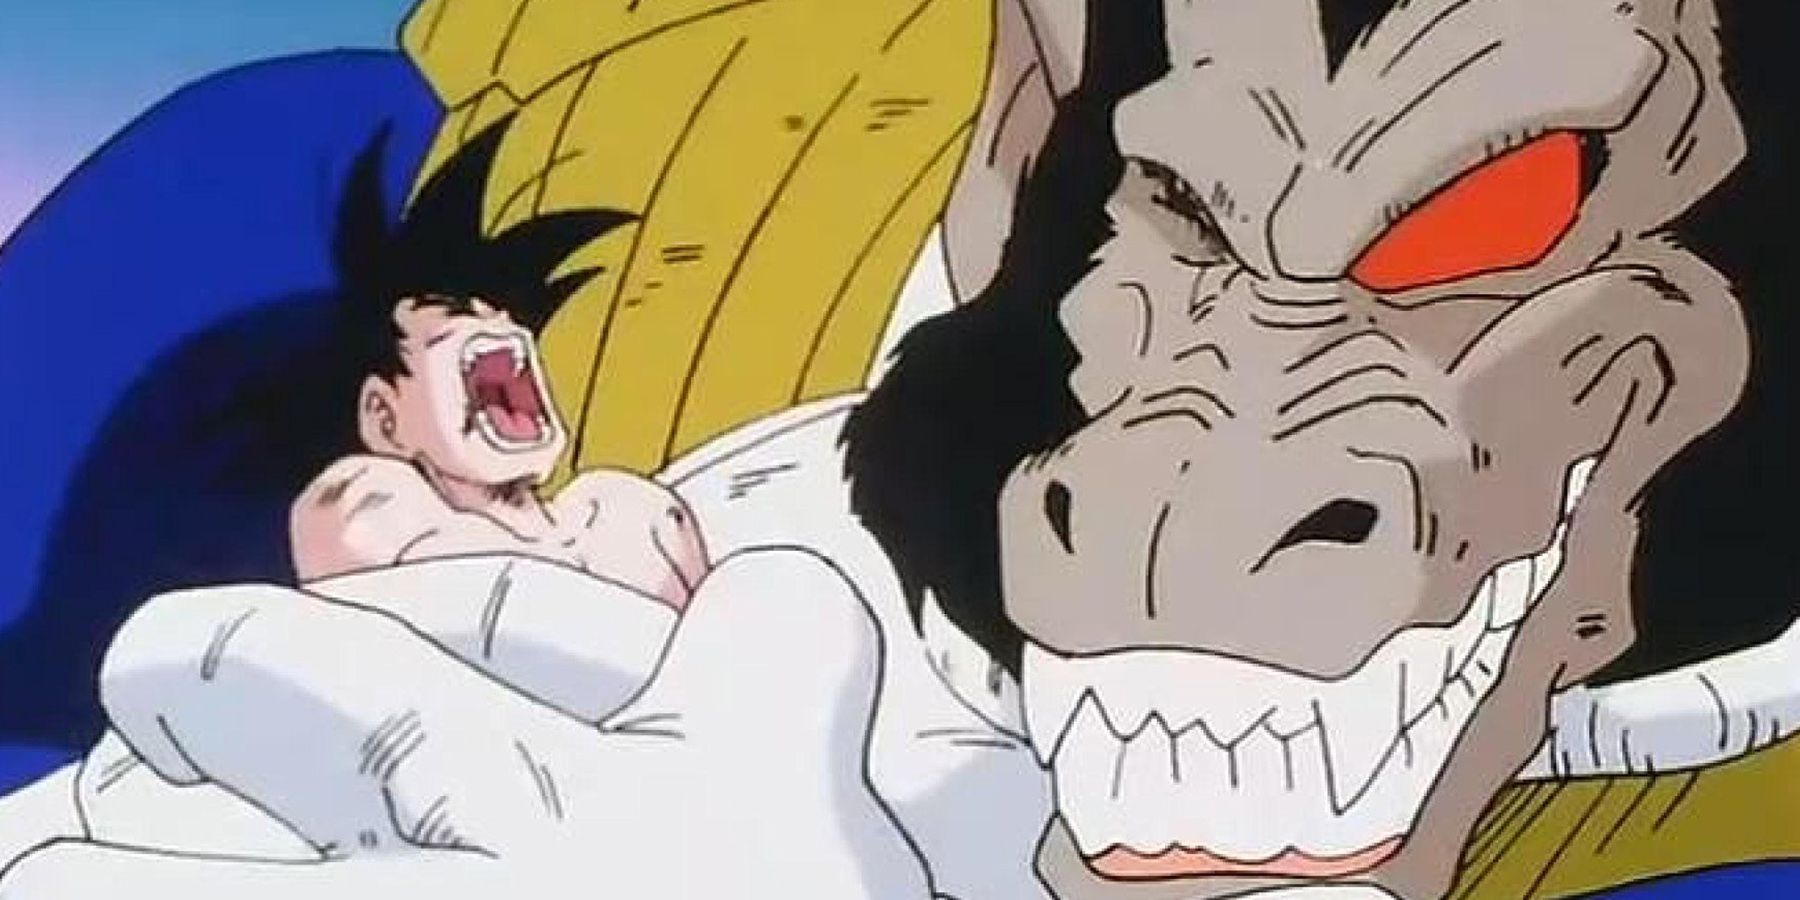 Great Ape Vegeta crushes Goku in Dragon Ball Z.